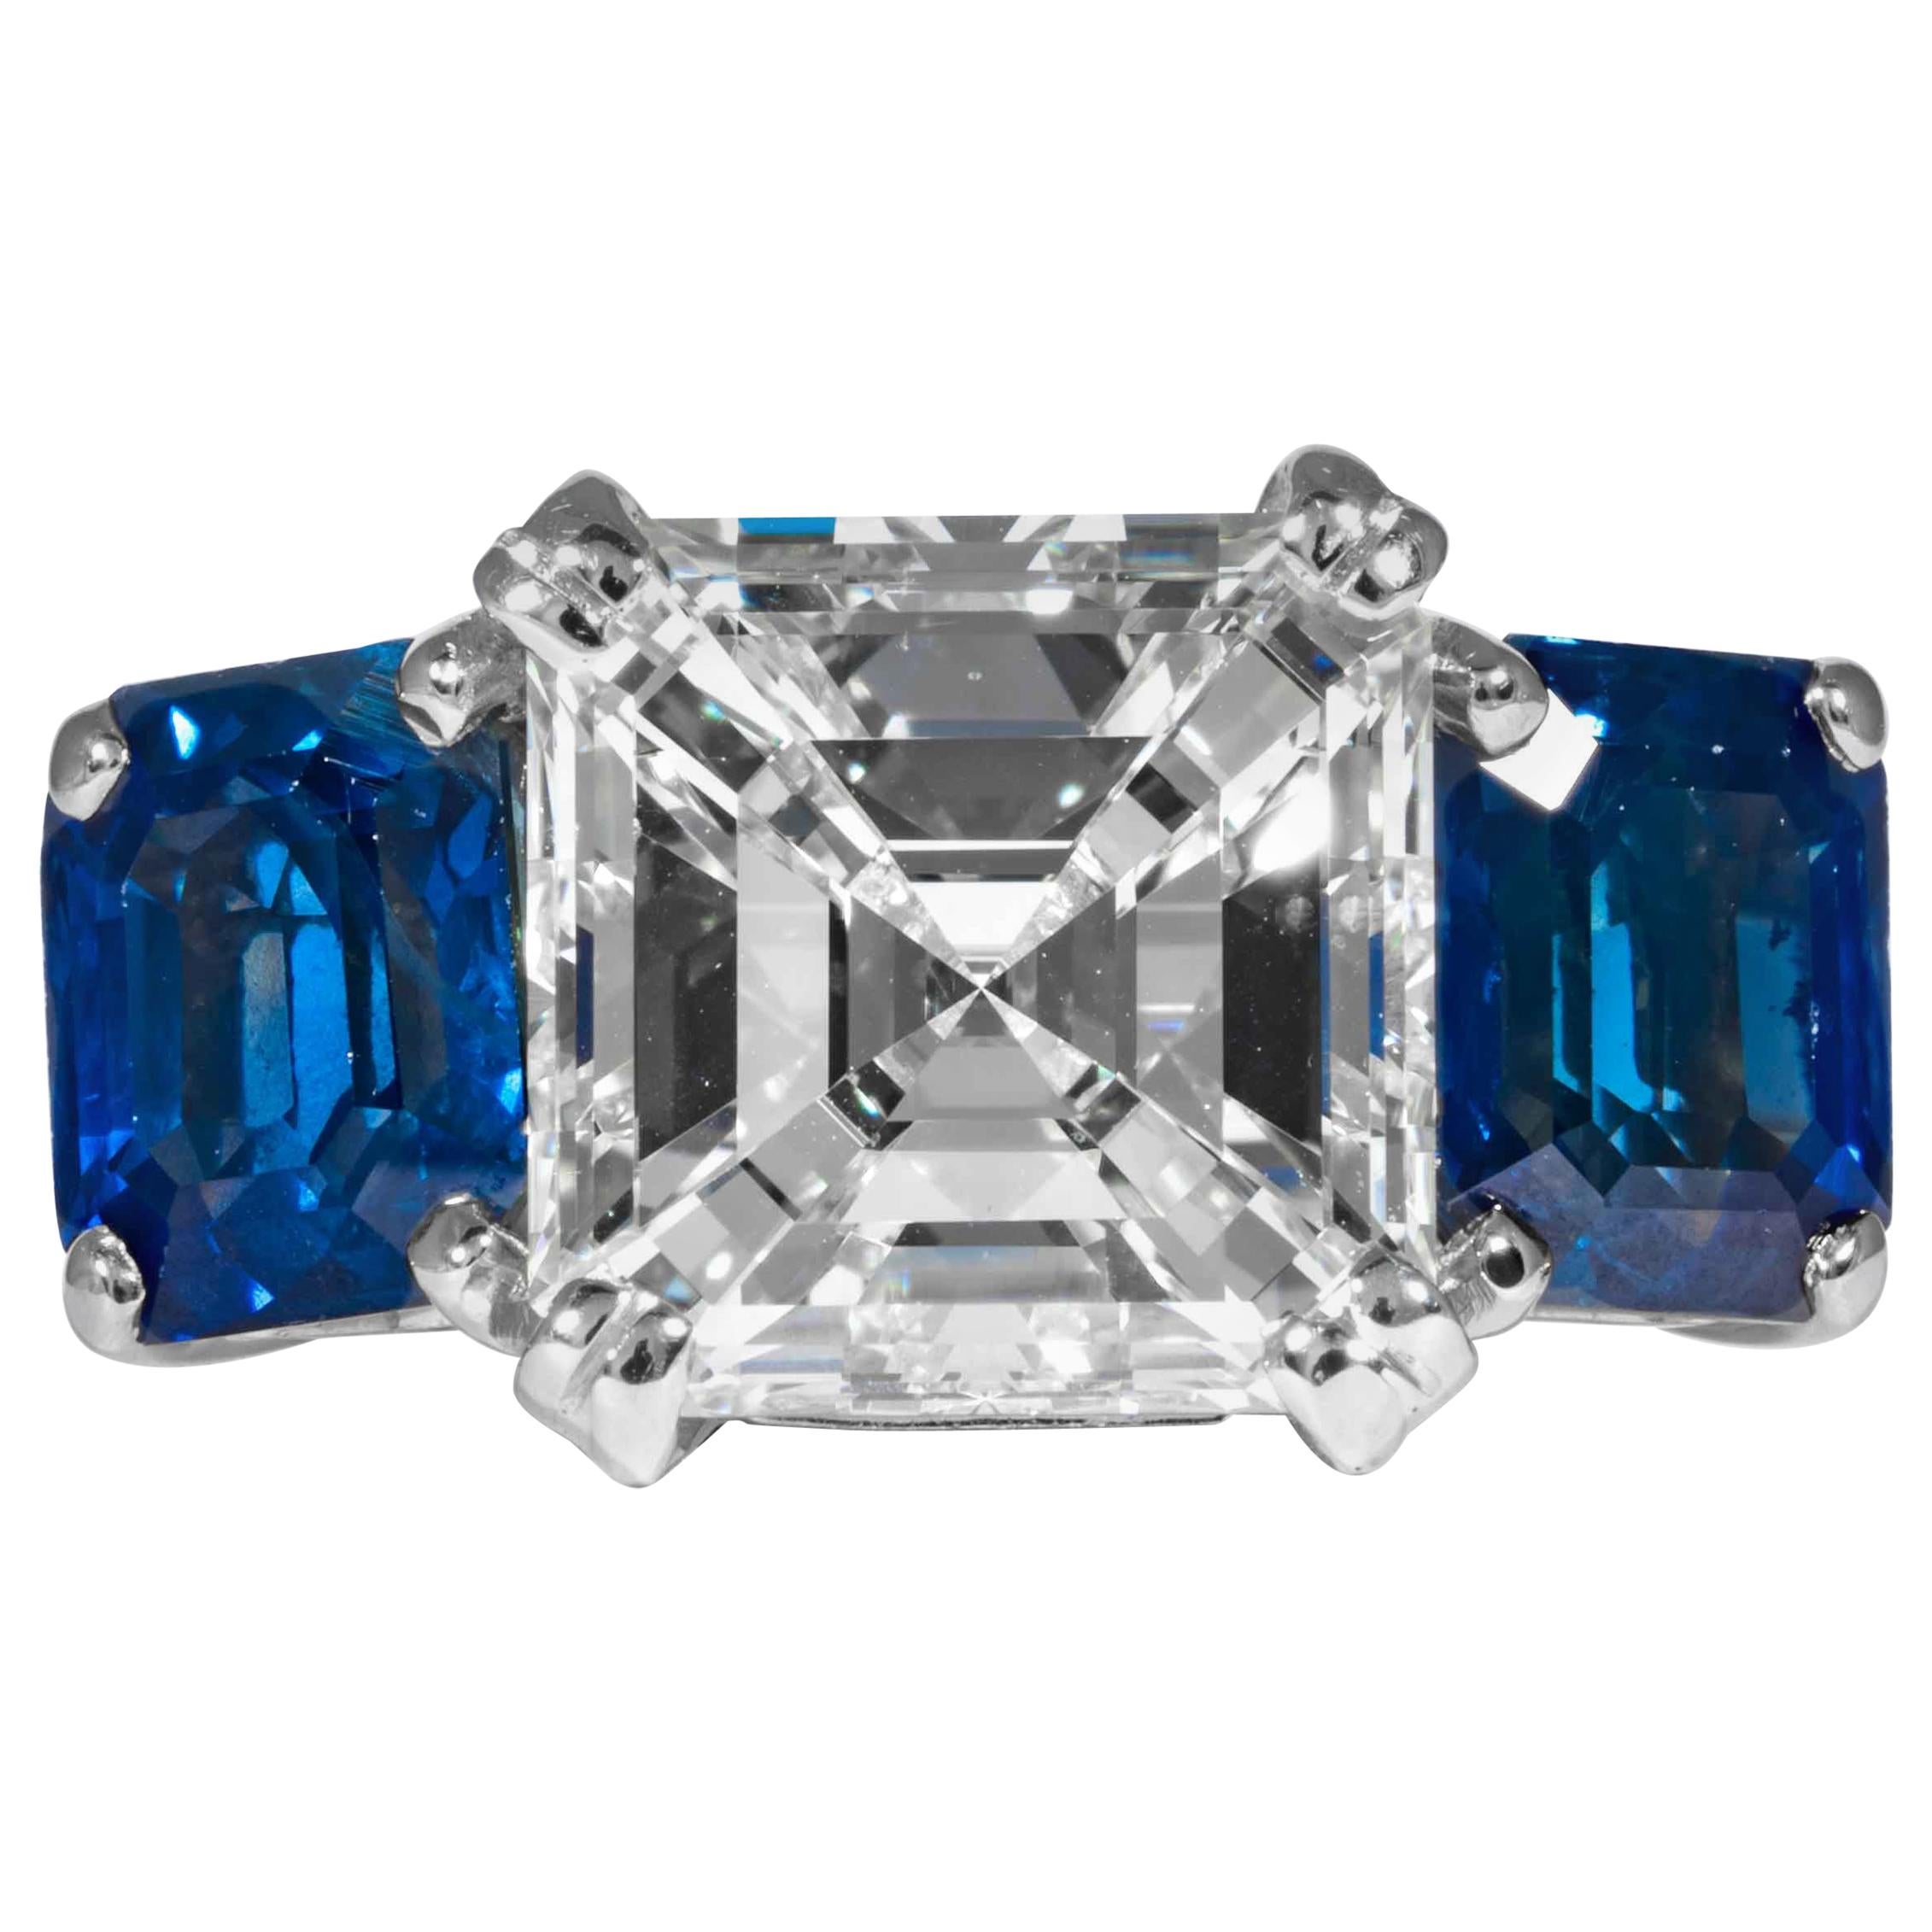 Shreve, Crump & Low GIA Certified 5.01 Carat Square Emerald Cut Diamond Ring